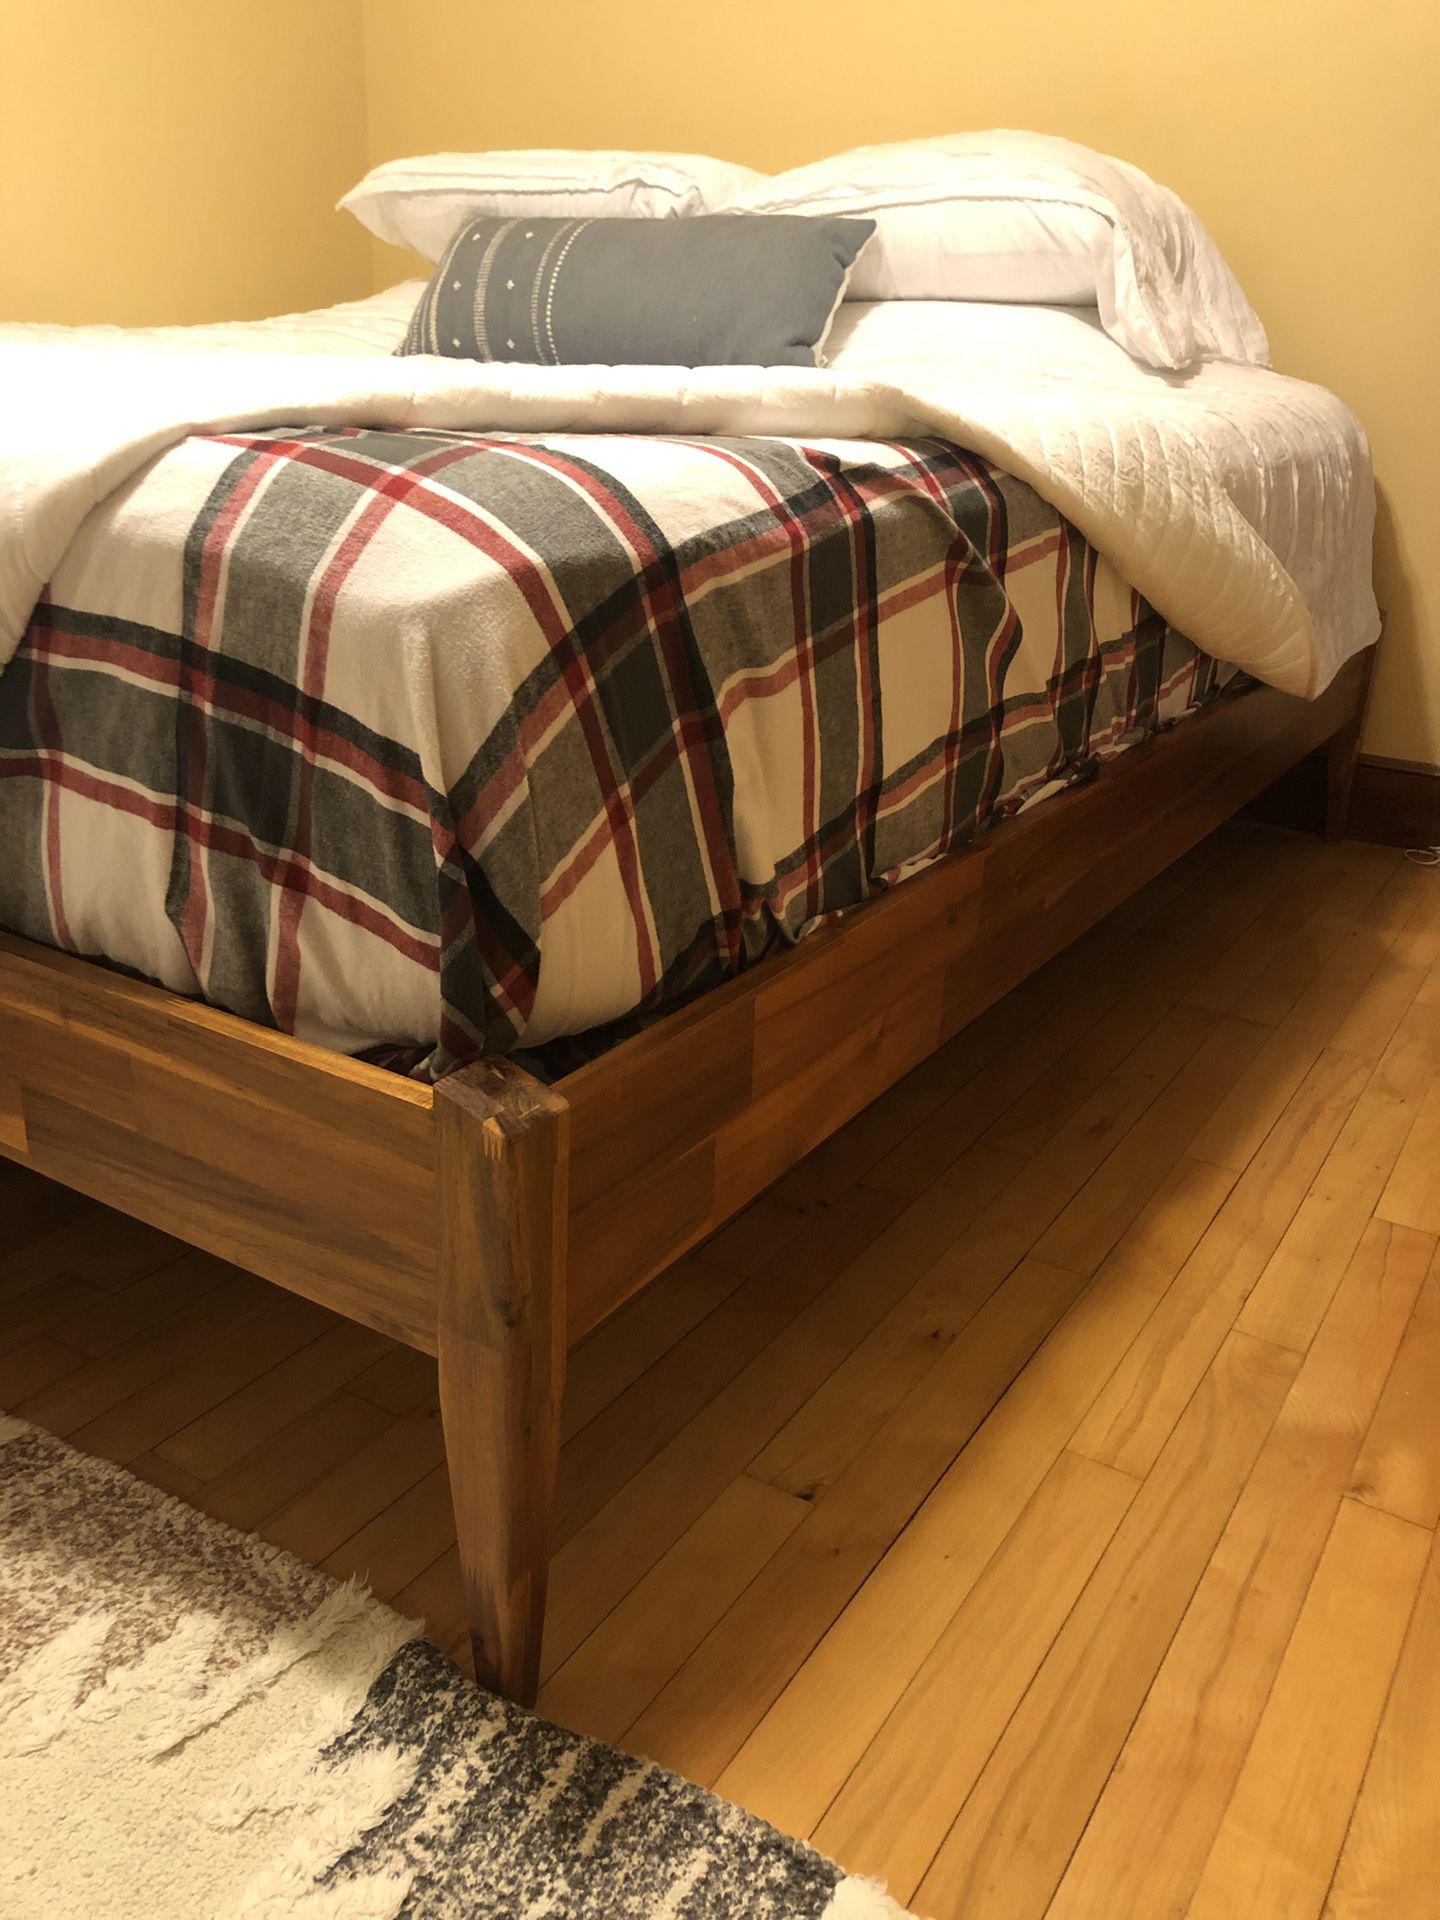 King Sized Casper Bed and Bed Frame Set 